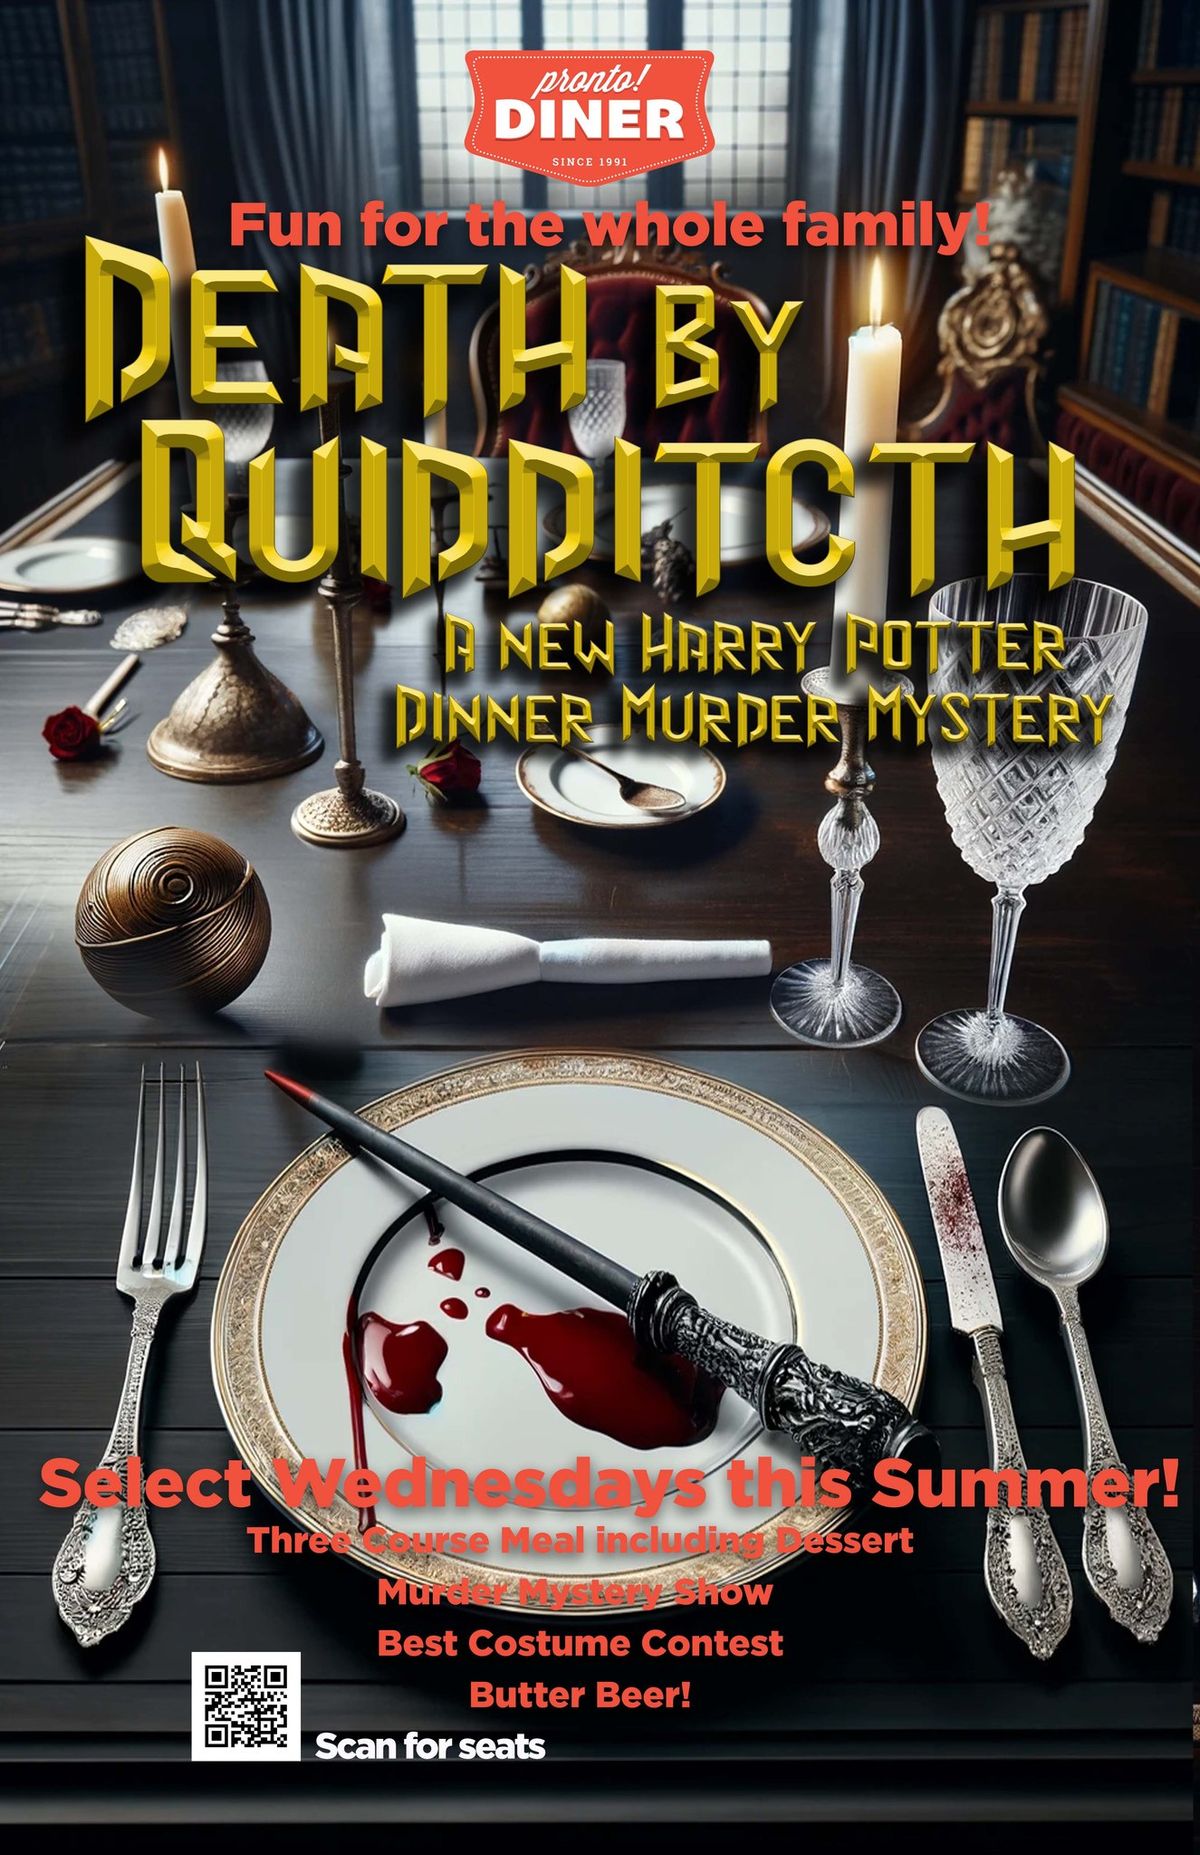 \u201cDeath by Quidditch\u201d A Harry Potter Dinner Murder Mystery